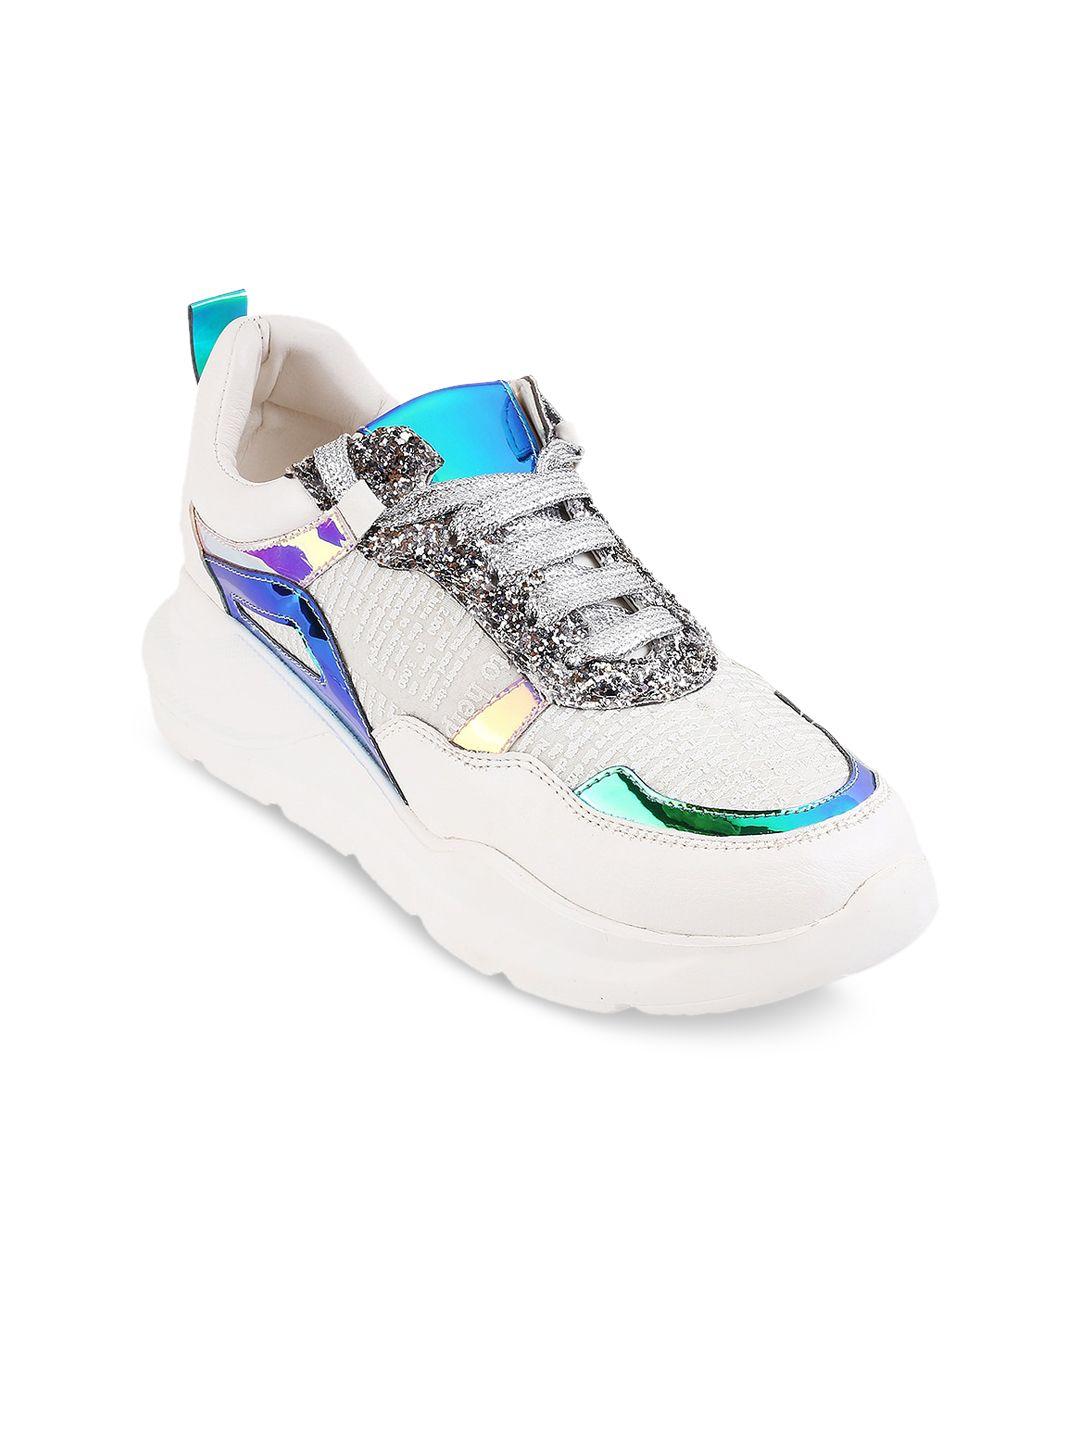 catwalk-women-white-&-silver-toned-colourblocked-sneakers